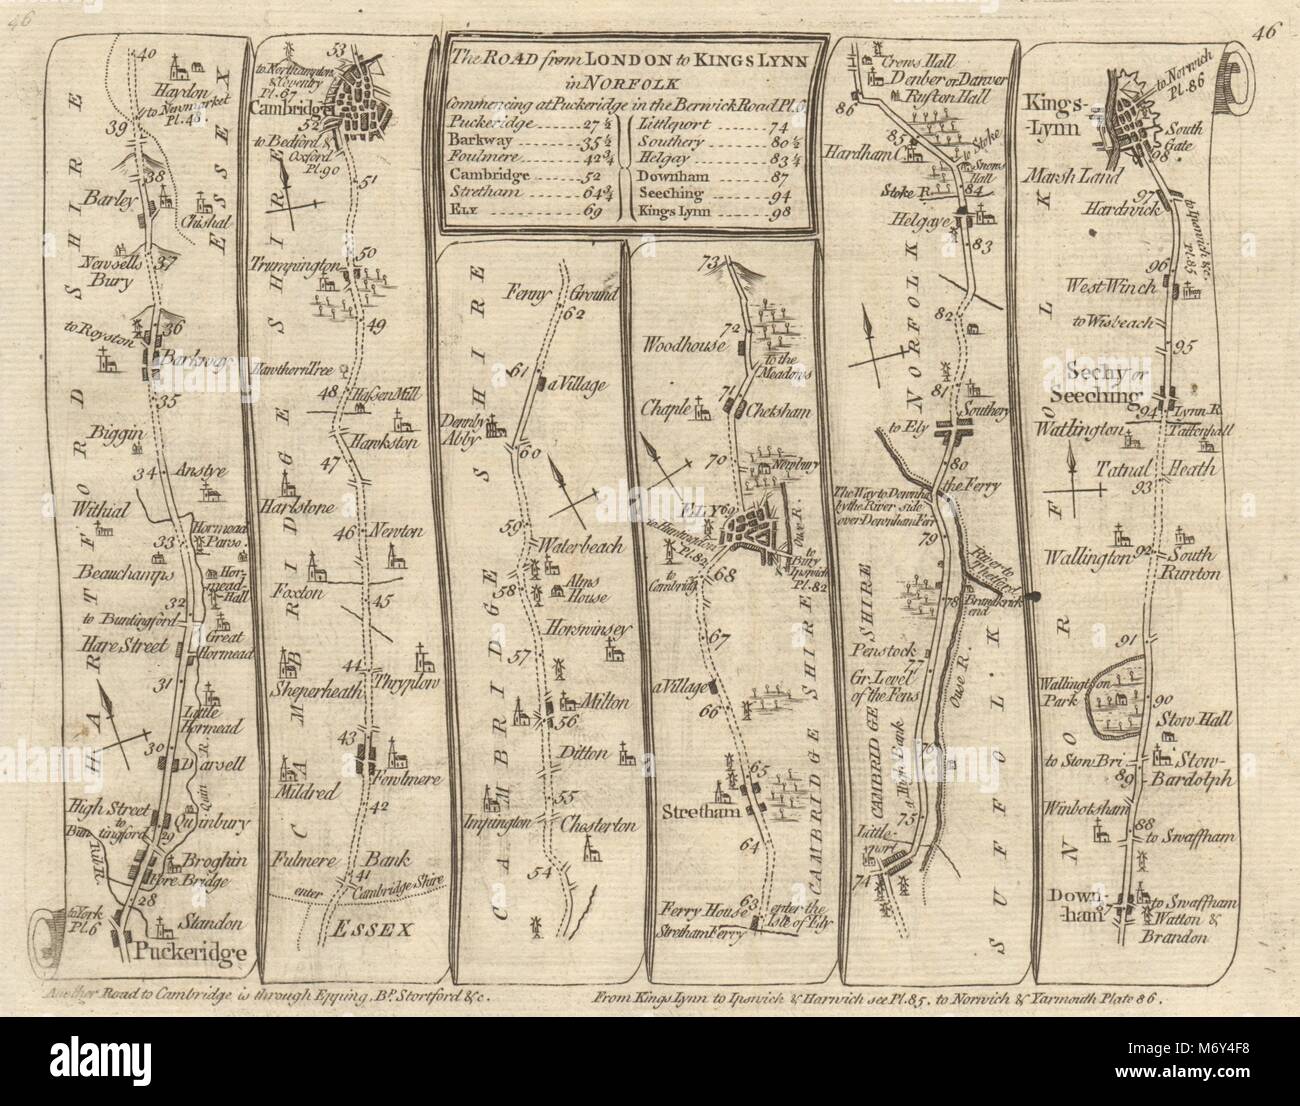 Puckeridge Cambridge Ely Downham Market King's Lynn. KITCHIN road map 1767 Stock Photo